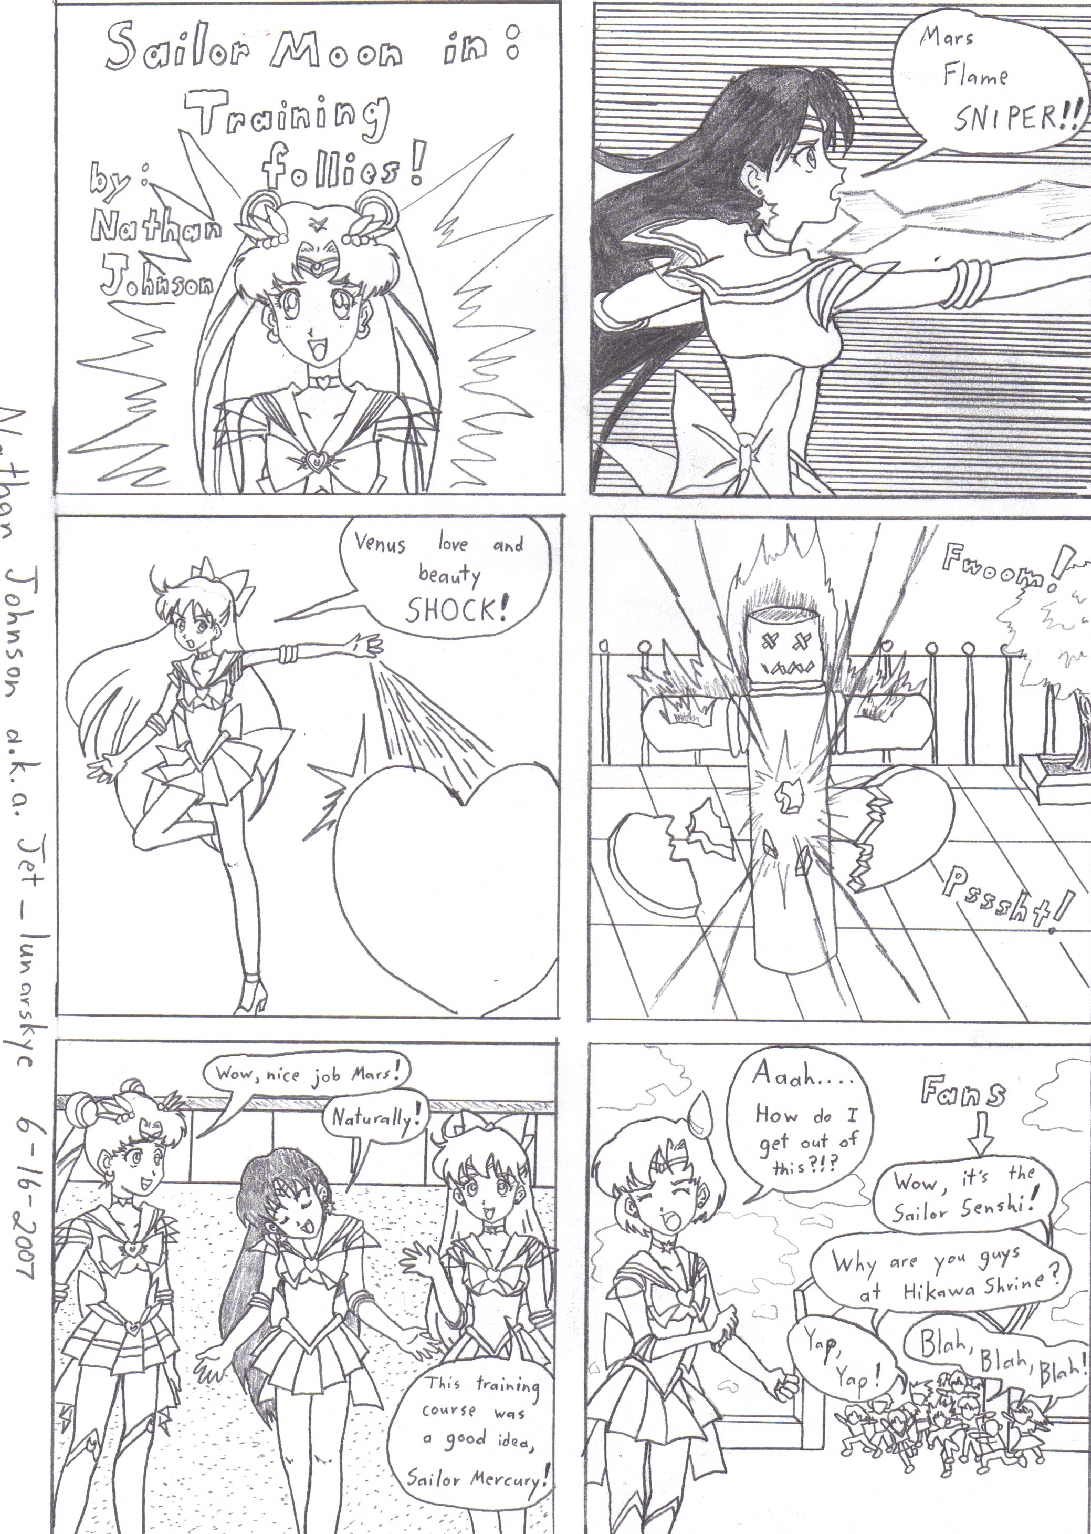 Mini-manga: Training Follies by Jet_lunarskye